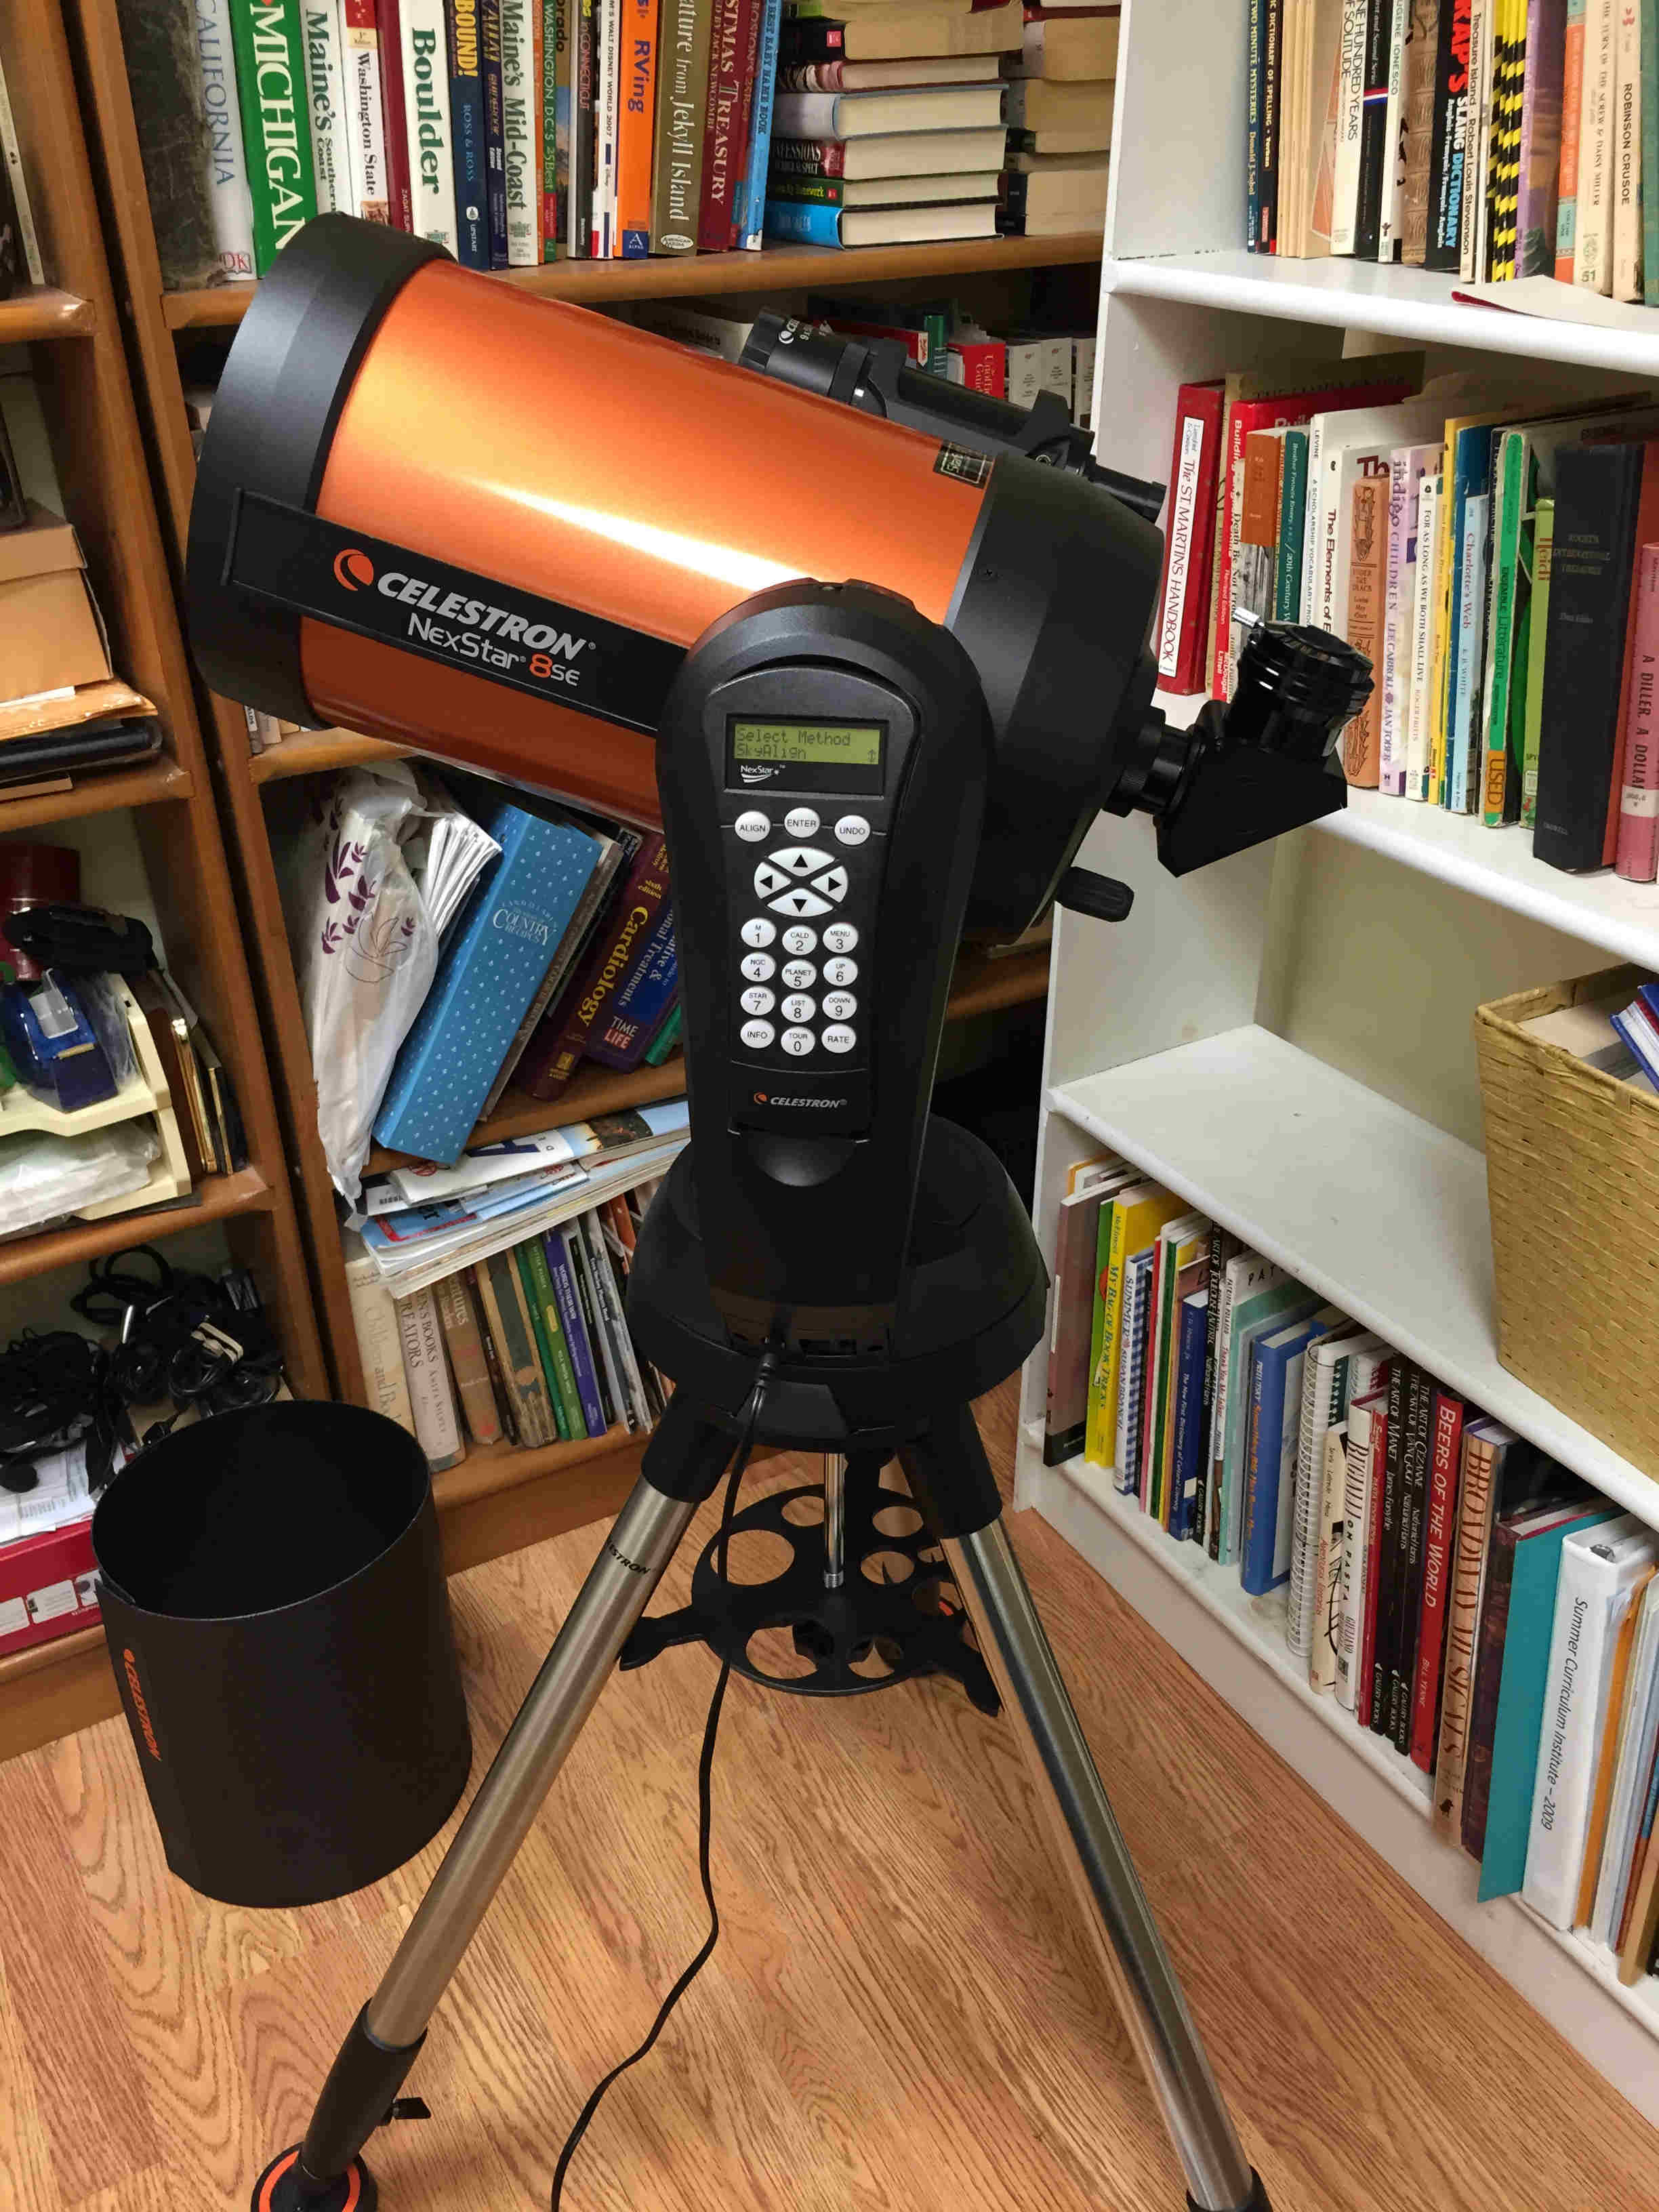 8 telescope for sale